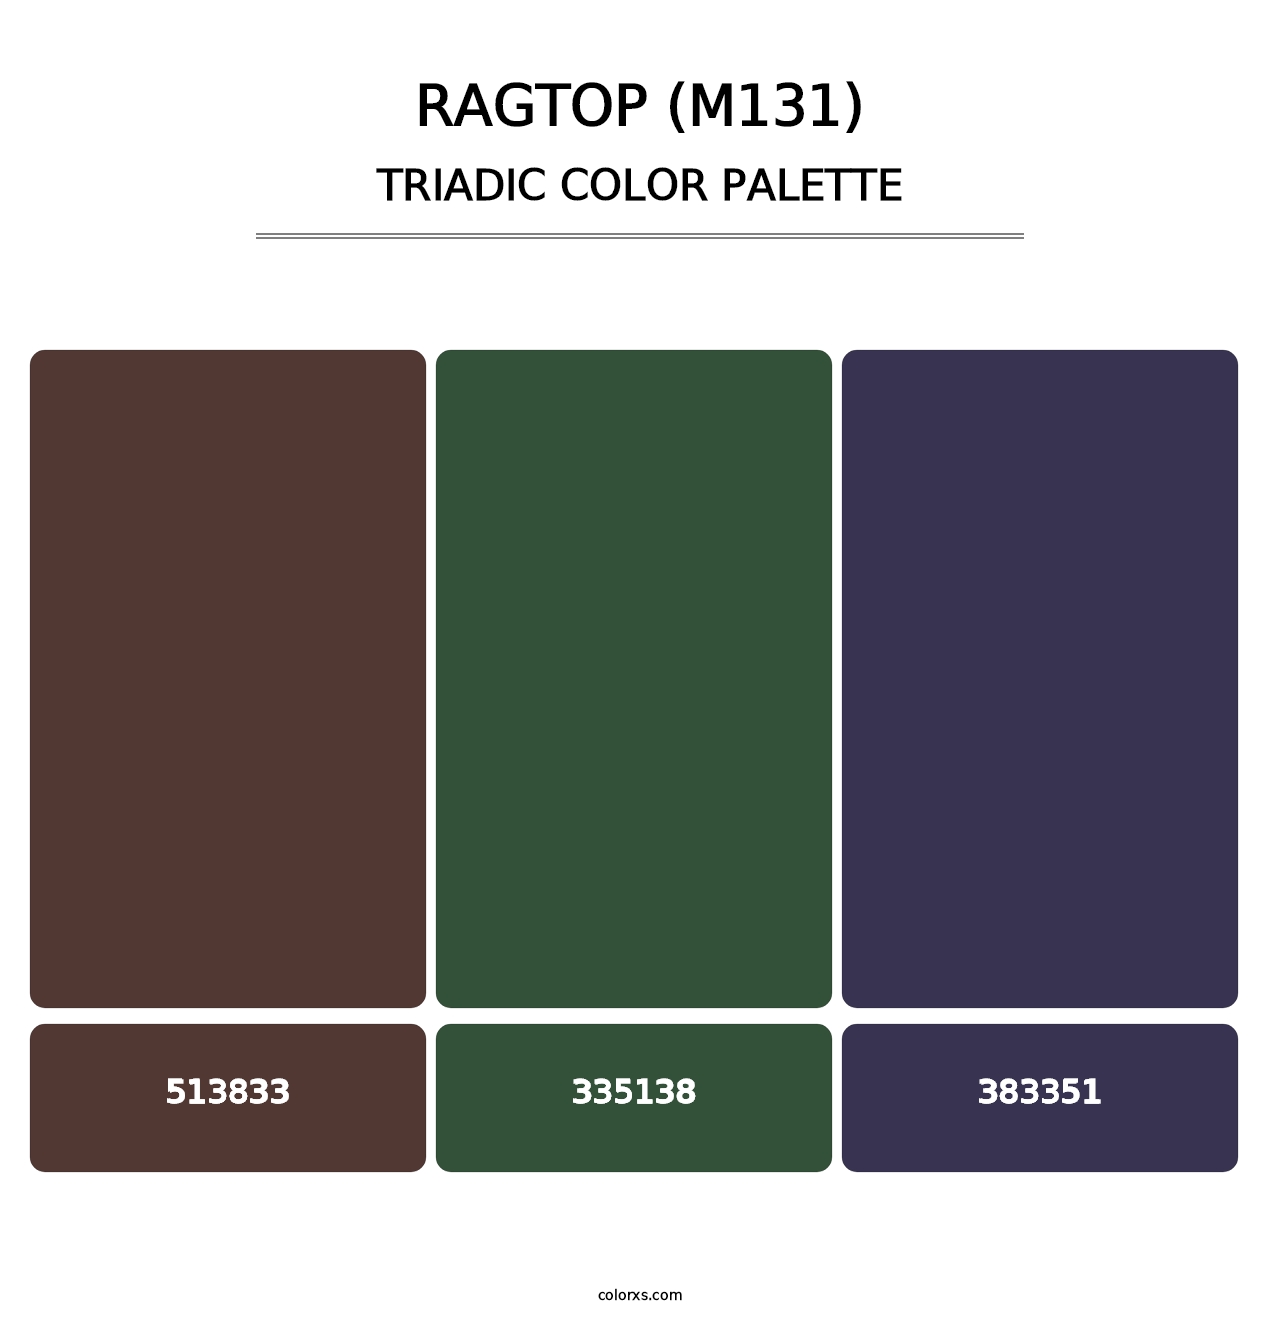 Ragtop (M131) - Triadic Color Palette